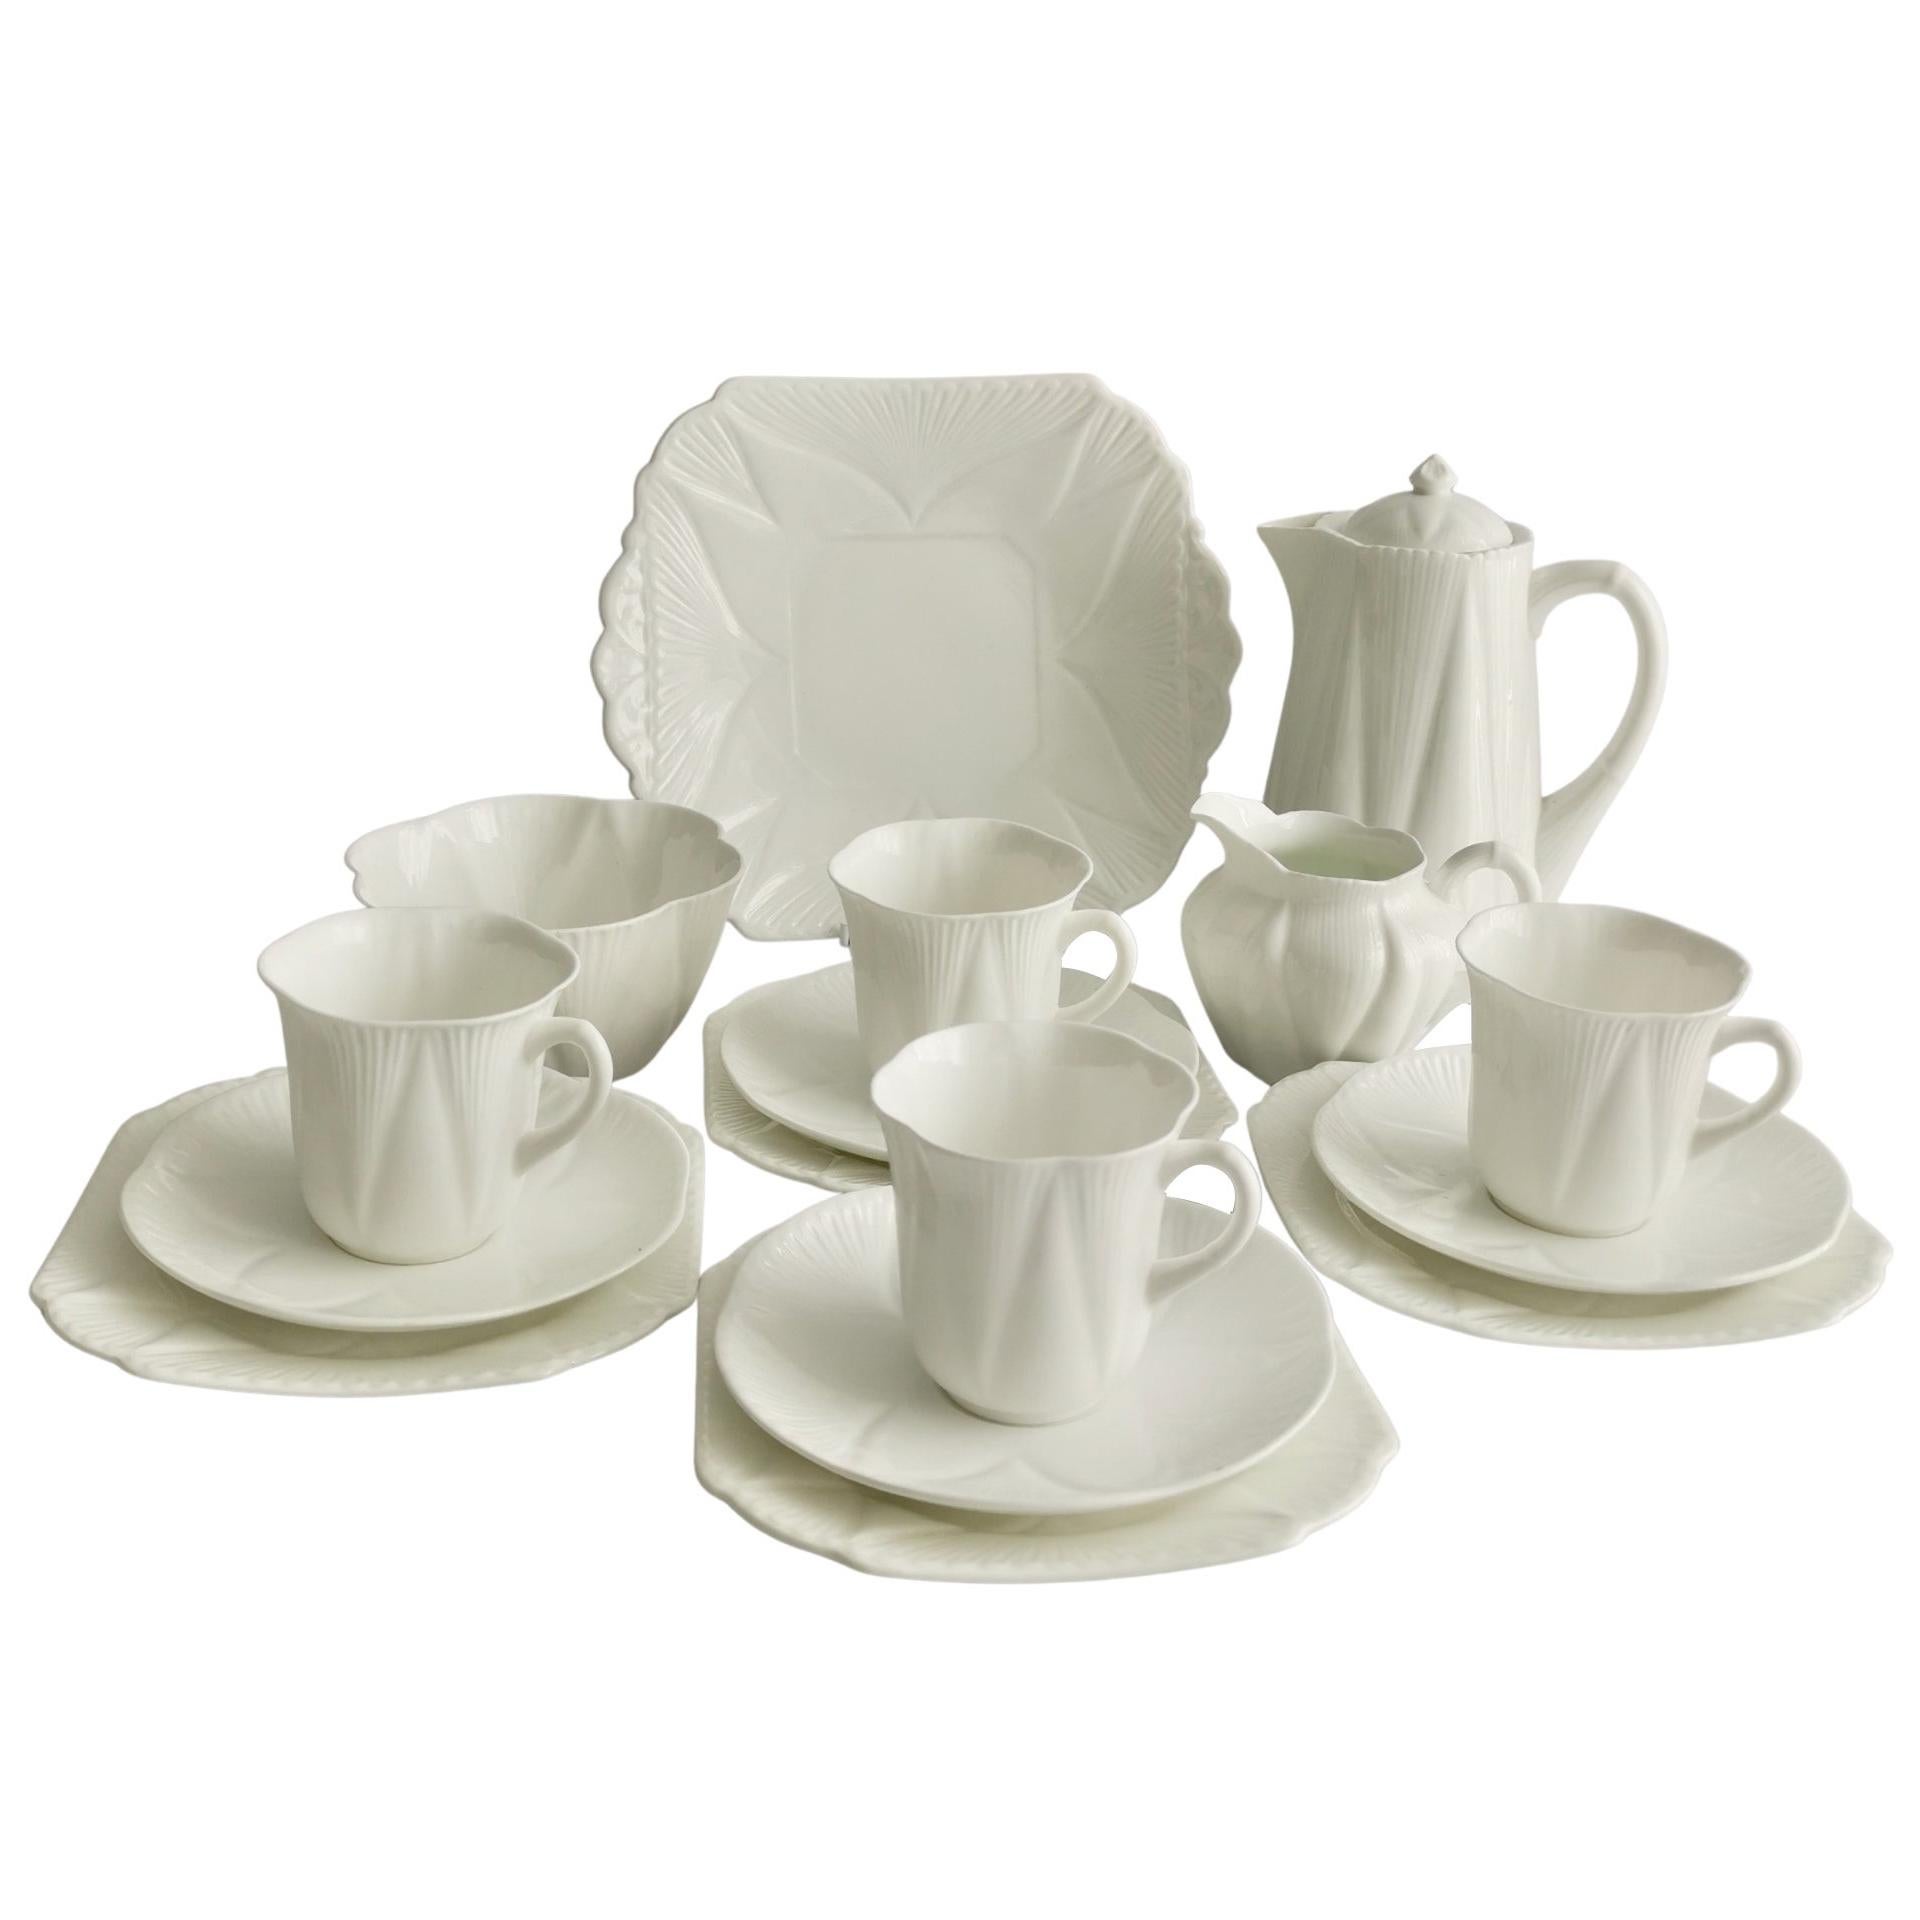 Shelley "Dainty White" Porcelain Coffee Service, Art Nouveau, 1926-1940